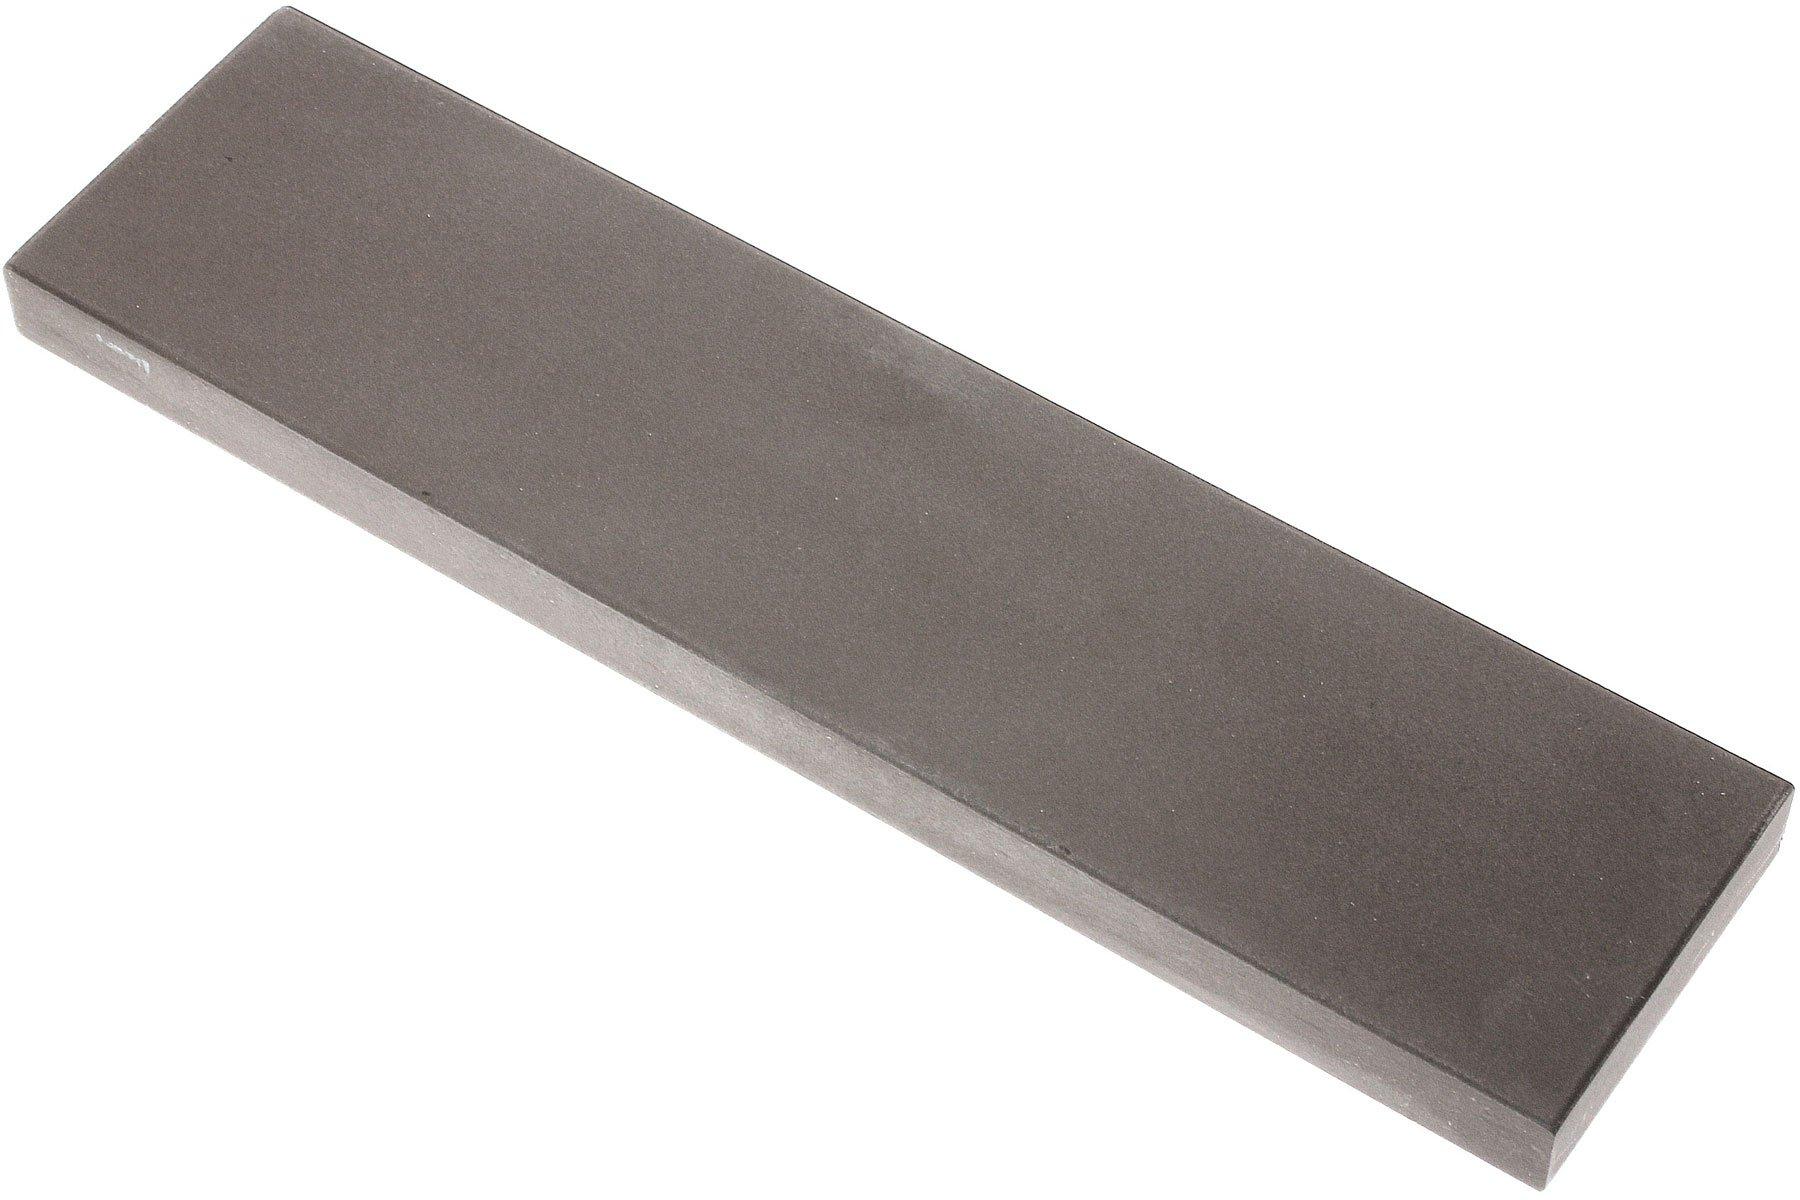  Spyderco Bench Stone 302-UF Ultra-Fine Knife Sharpener Grey :  Sports & Outdoors